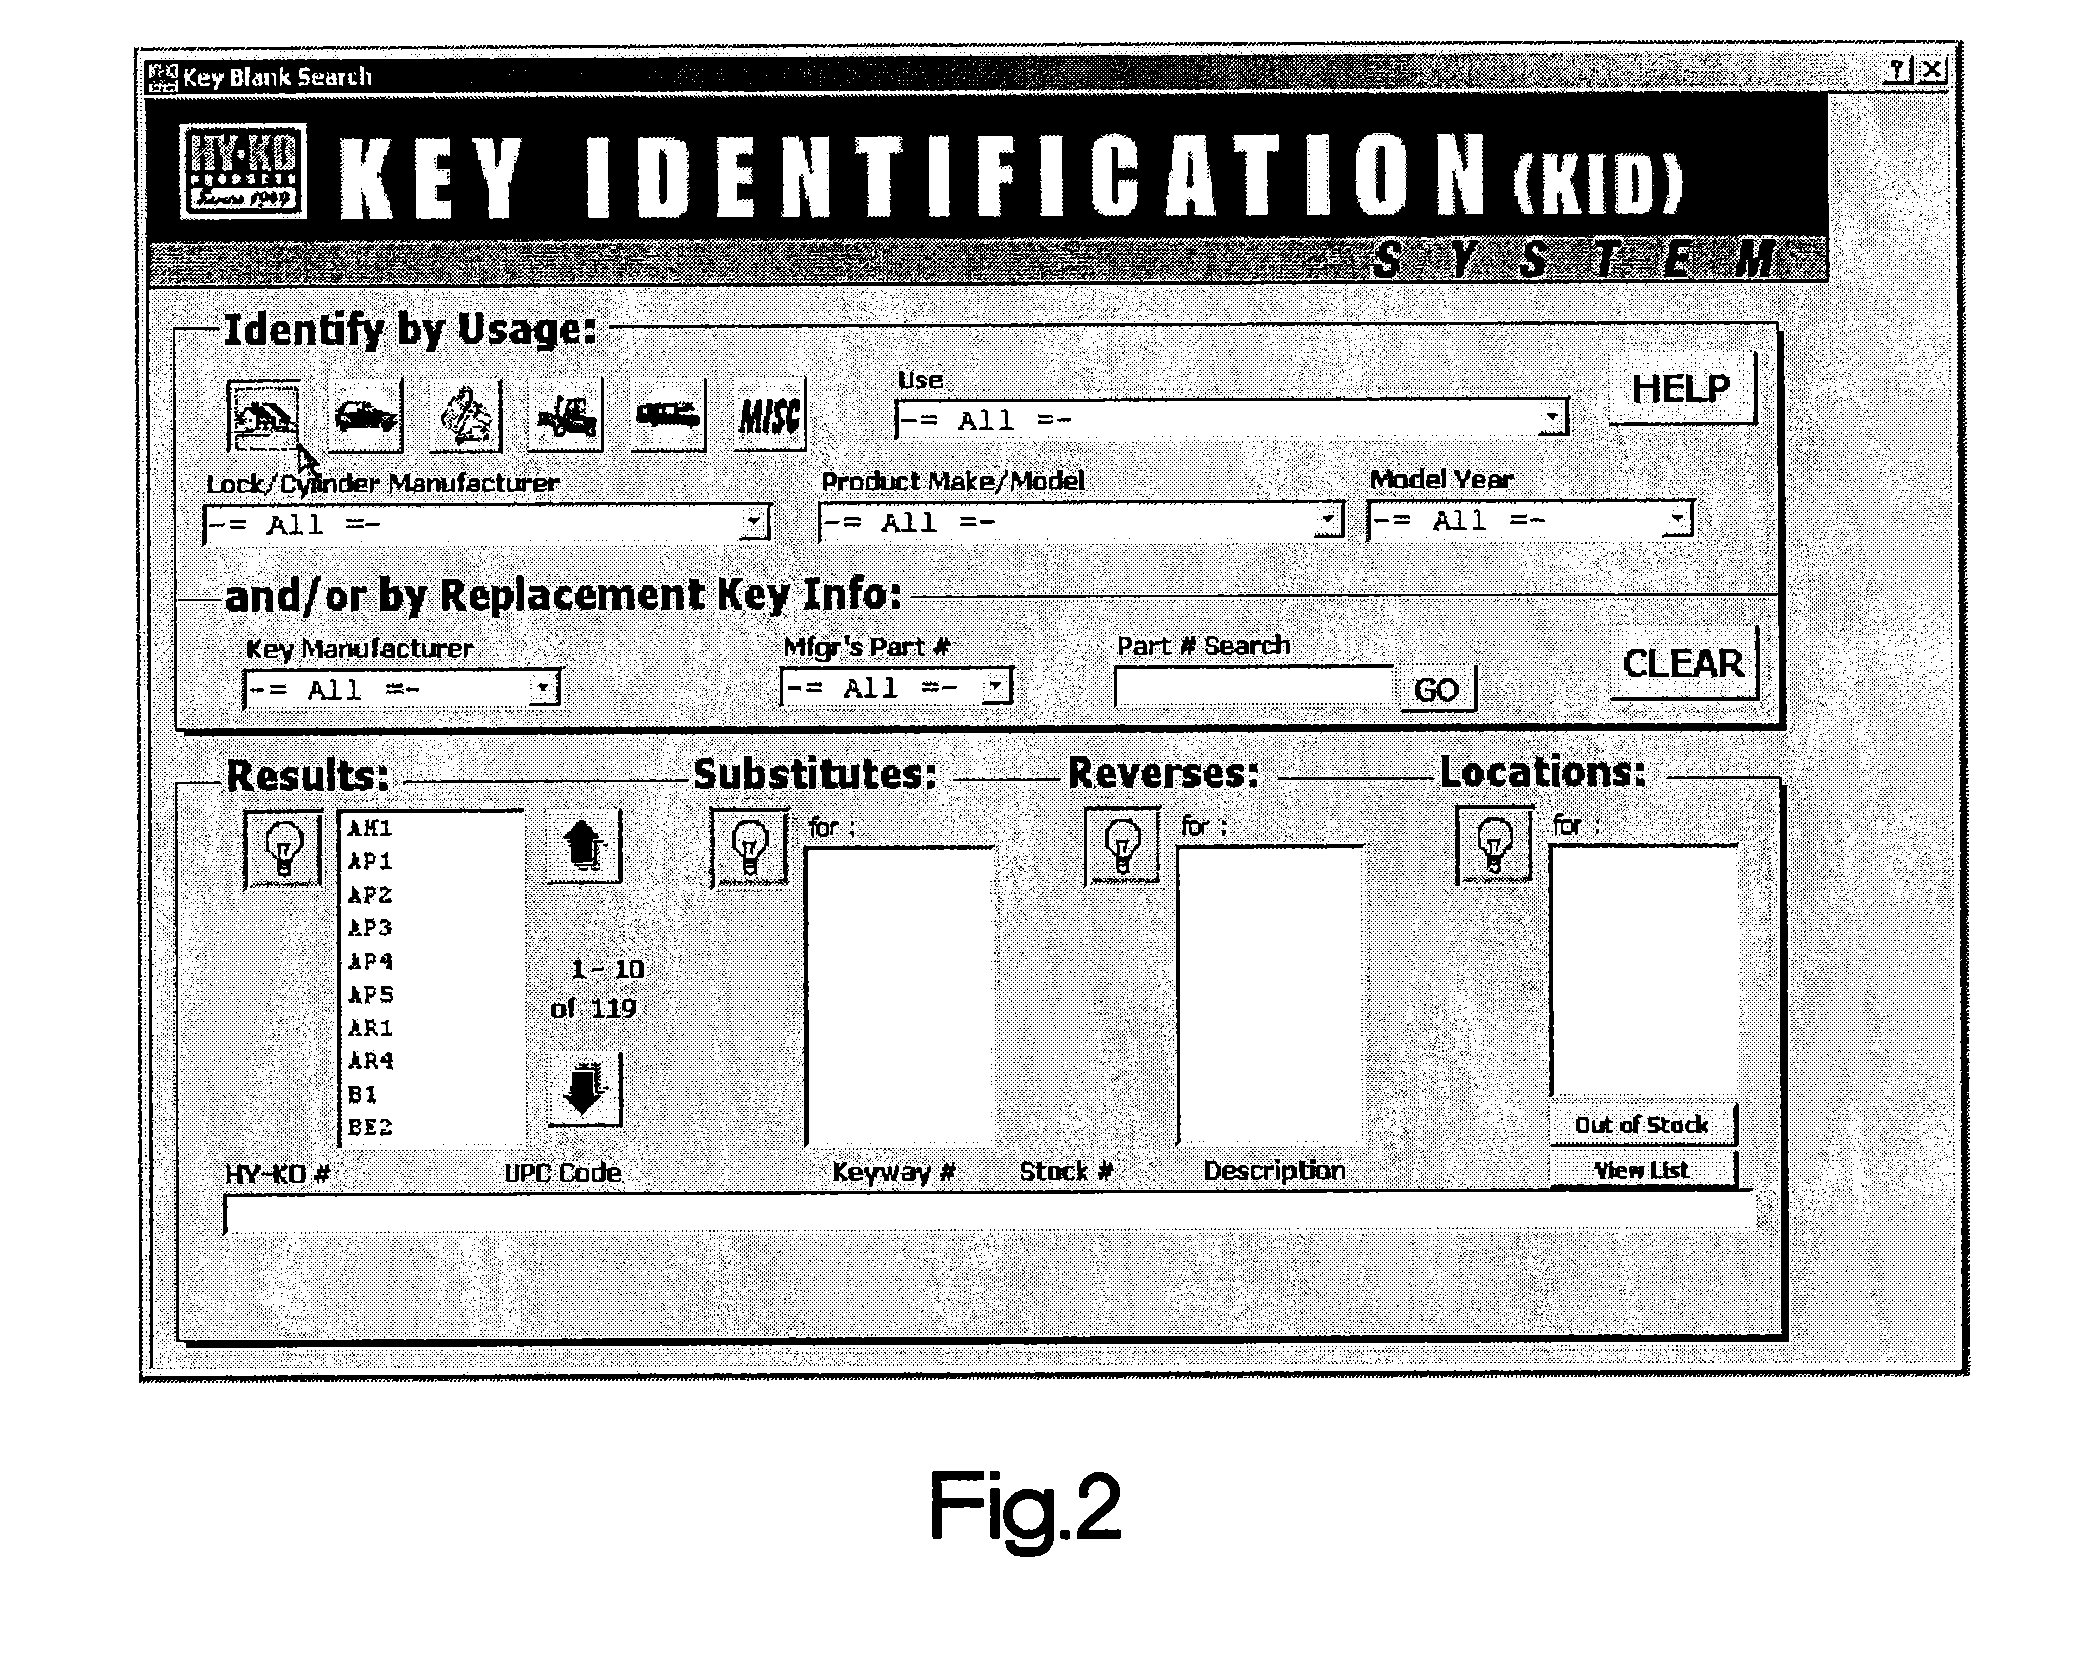 Object identification system